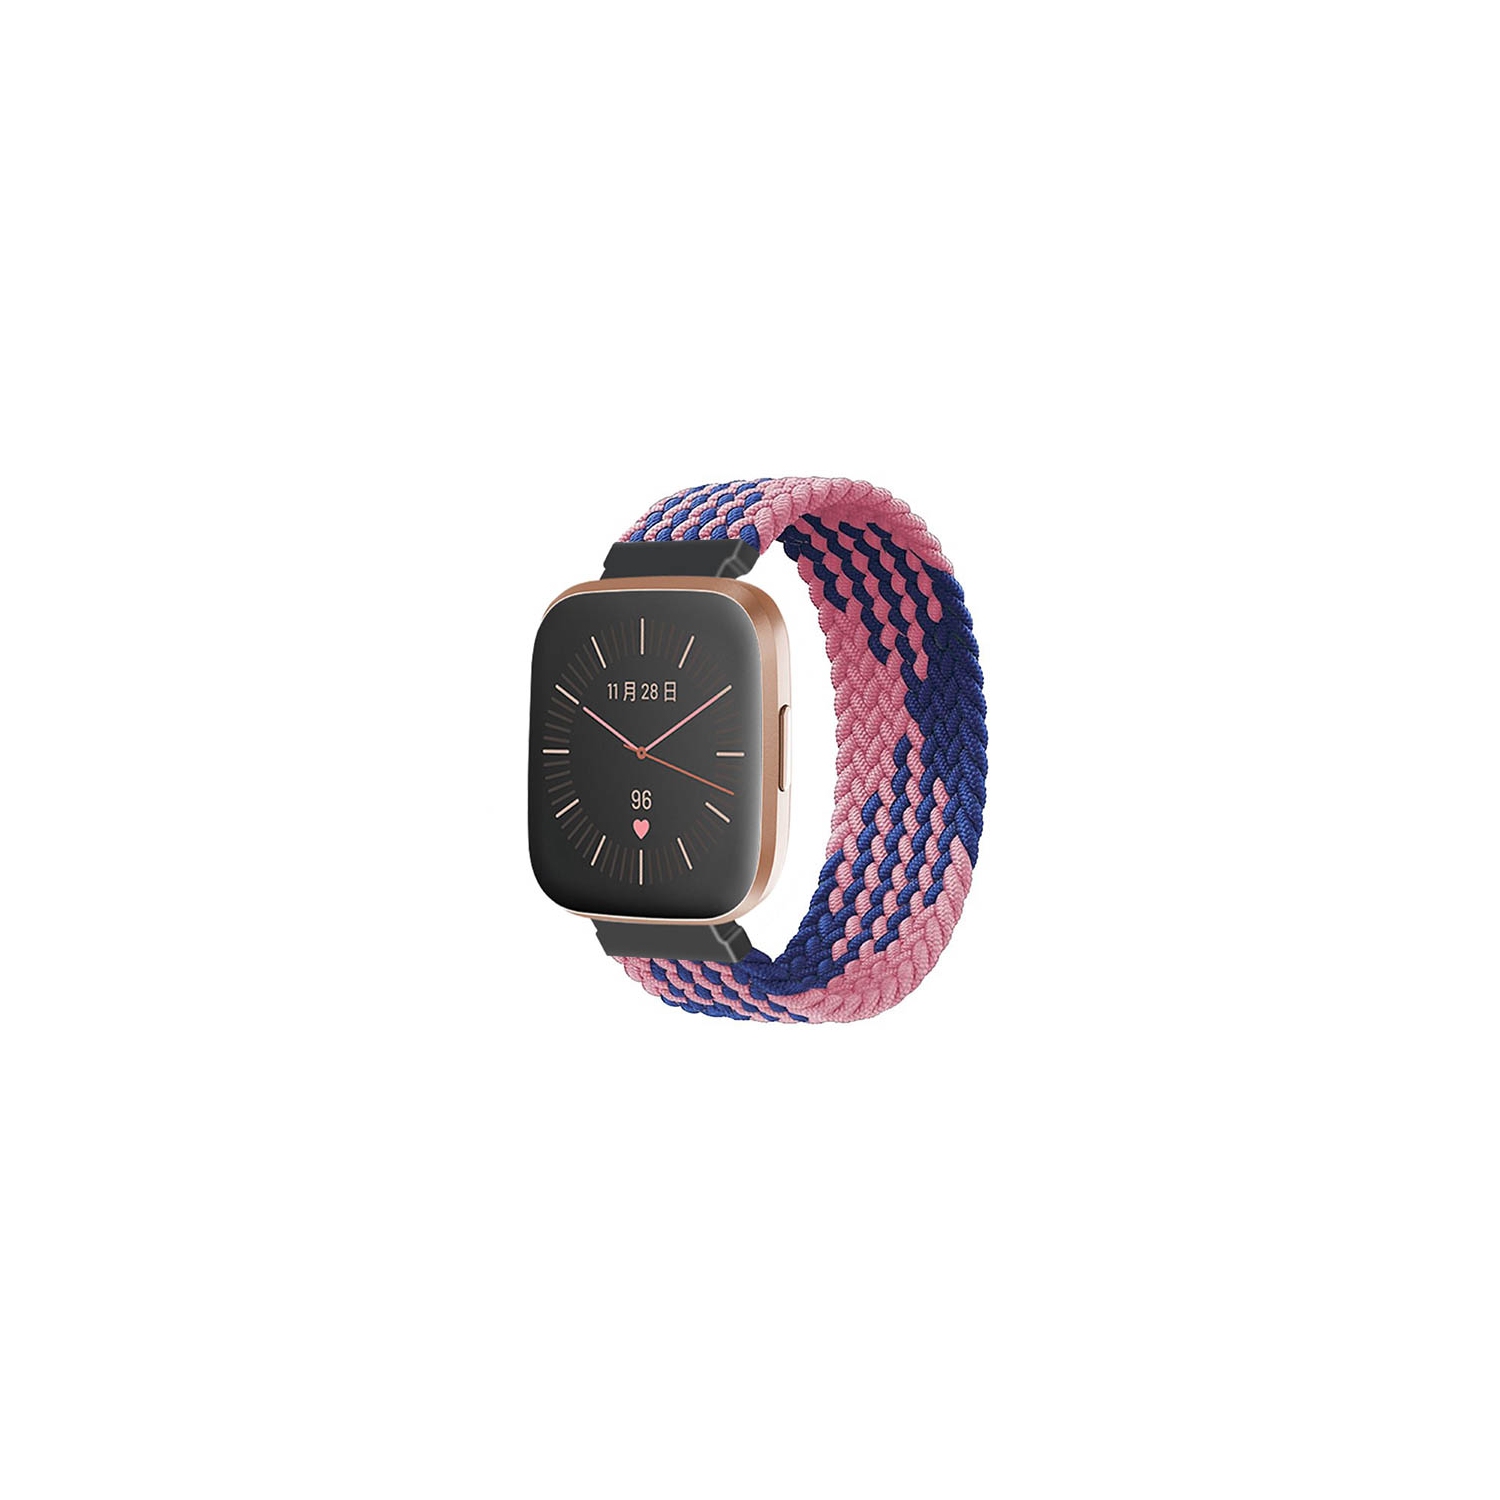 StrapsCo Patterned Elastic Nylon Watch Band Strap for Fitbit Versa & Versa 2 - L - Fits 6.6" - 6.9" Wrist - Pink & Blue Buffalo